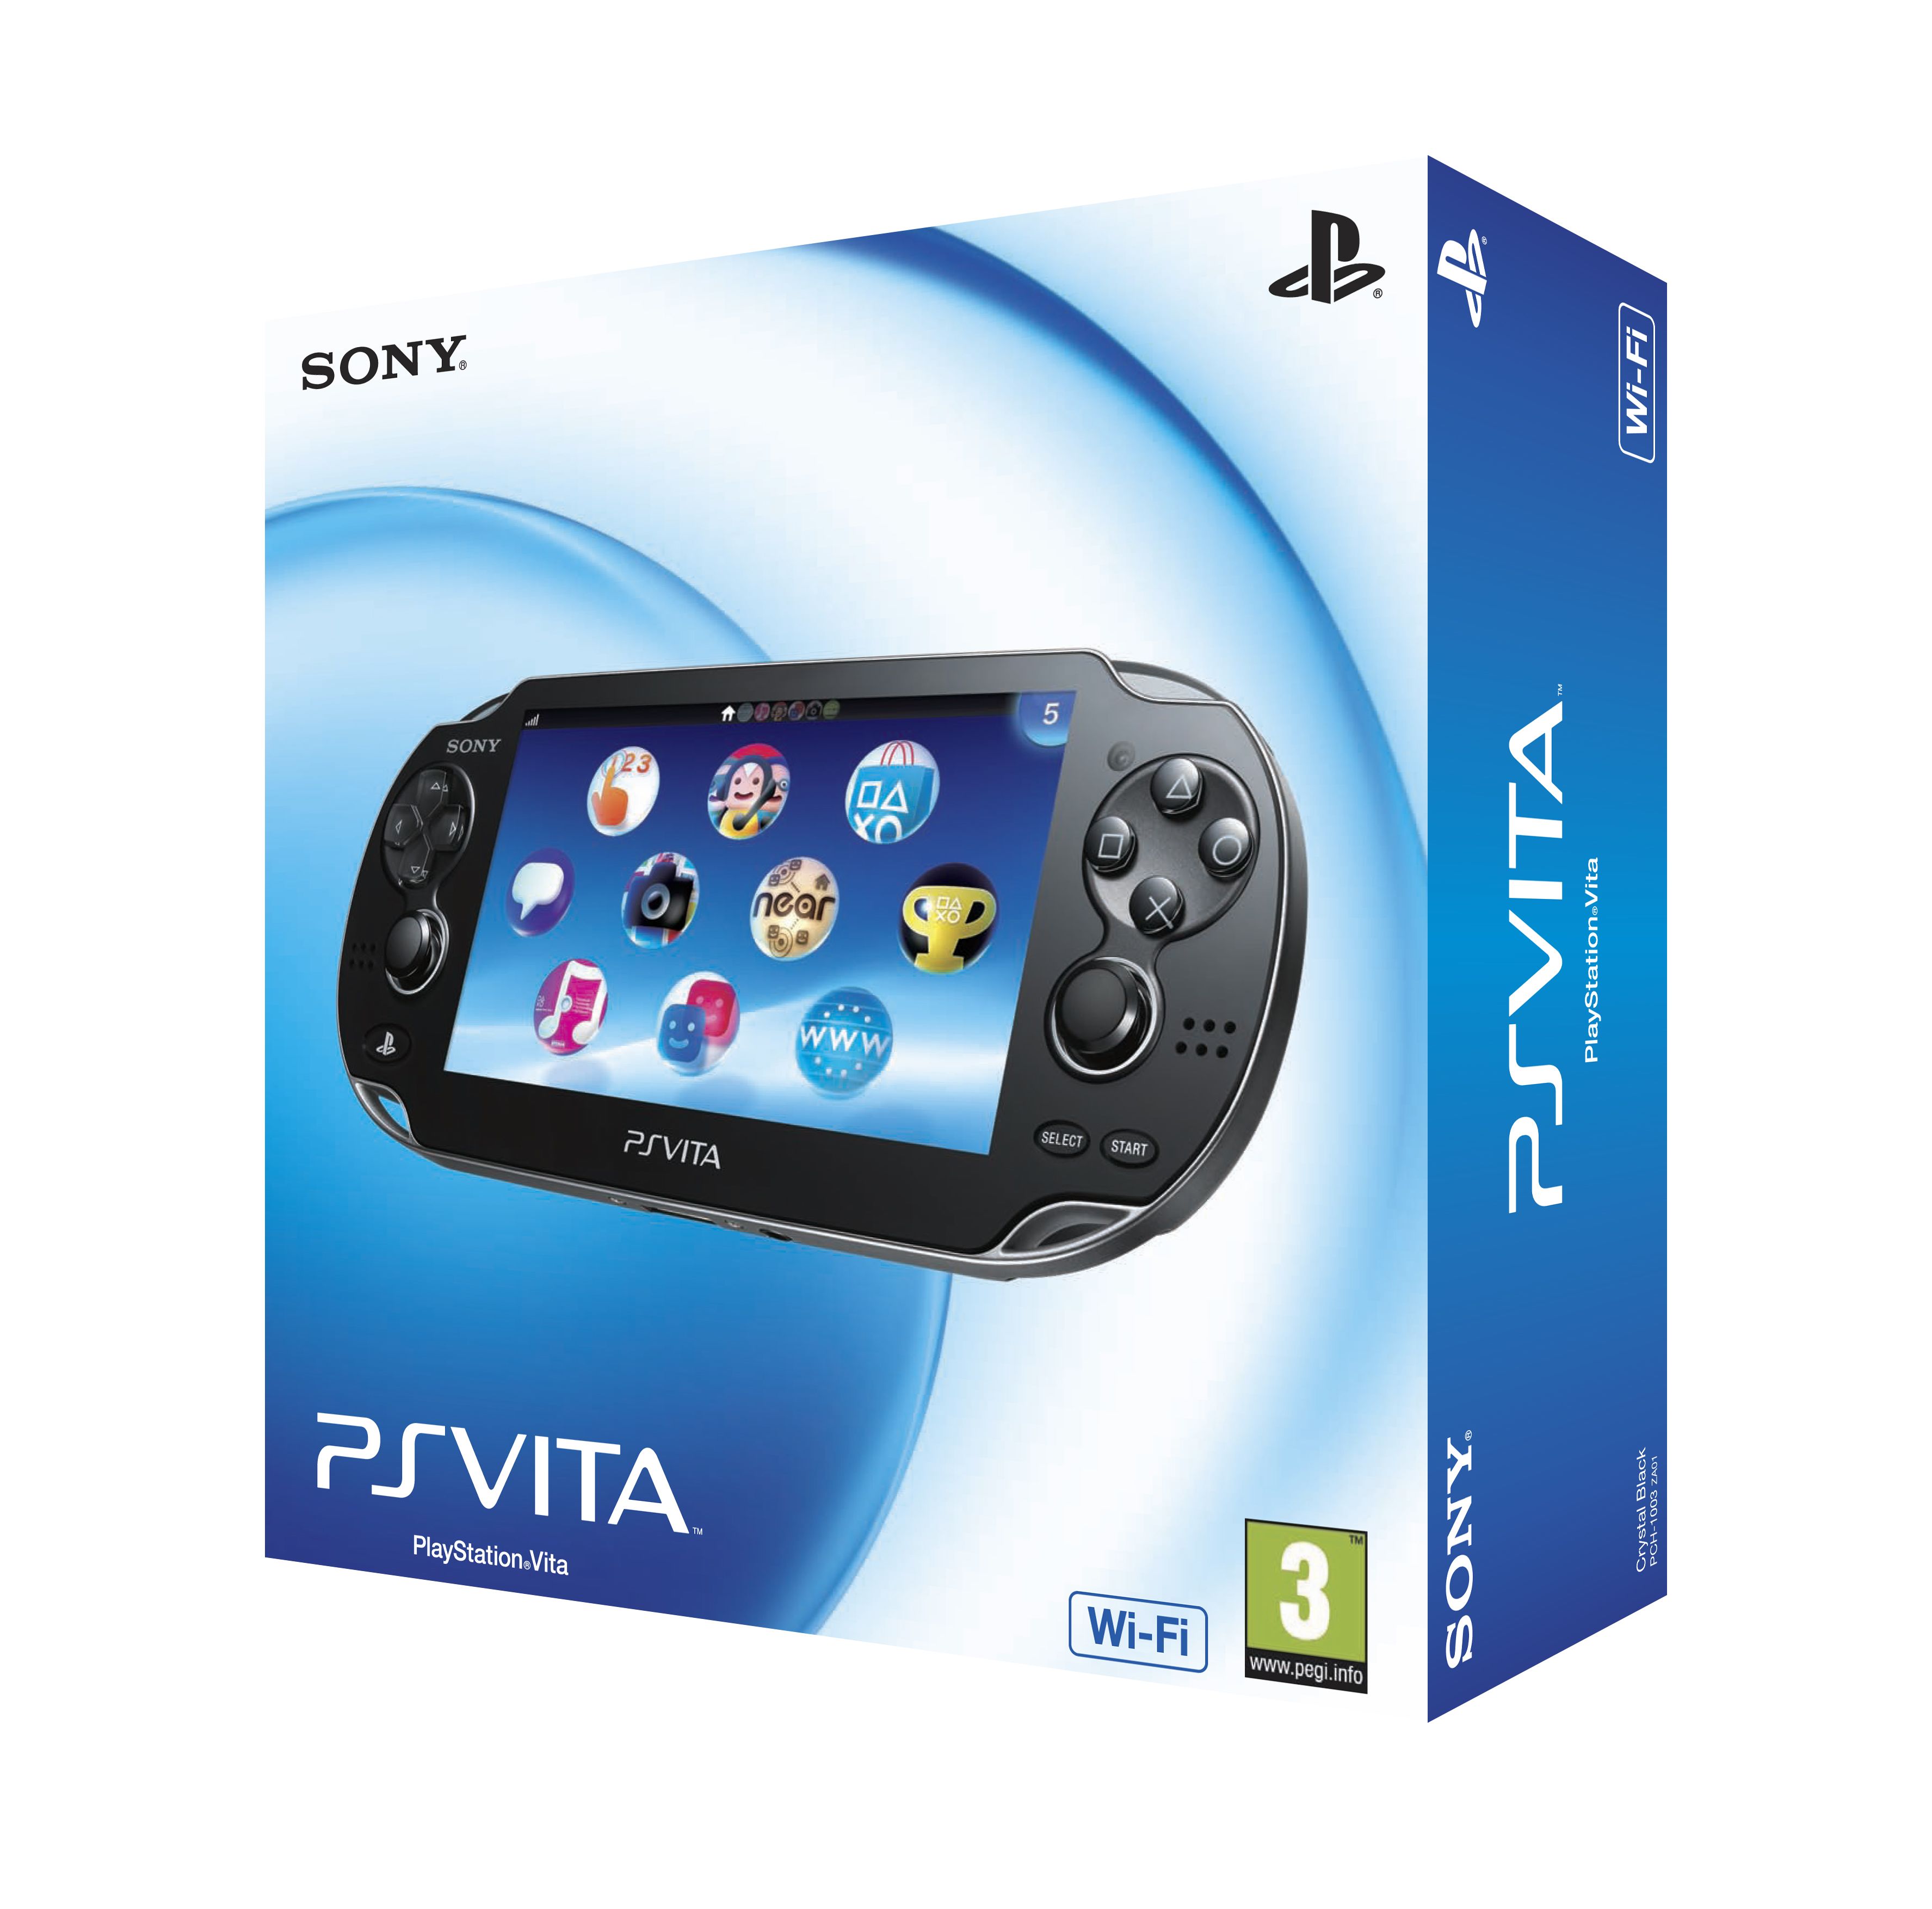 Acheter Playstation Vita Wifi - PSVita prix promo neuf et occasion pas cher